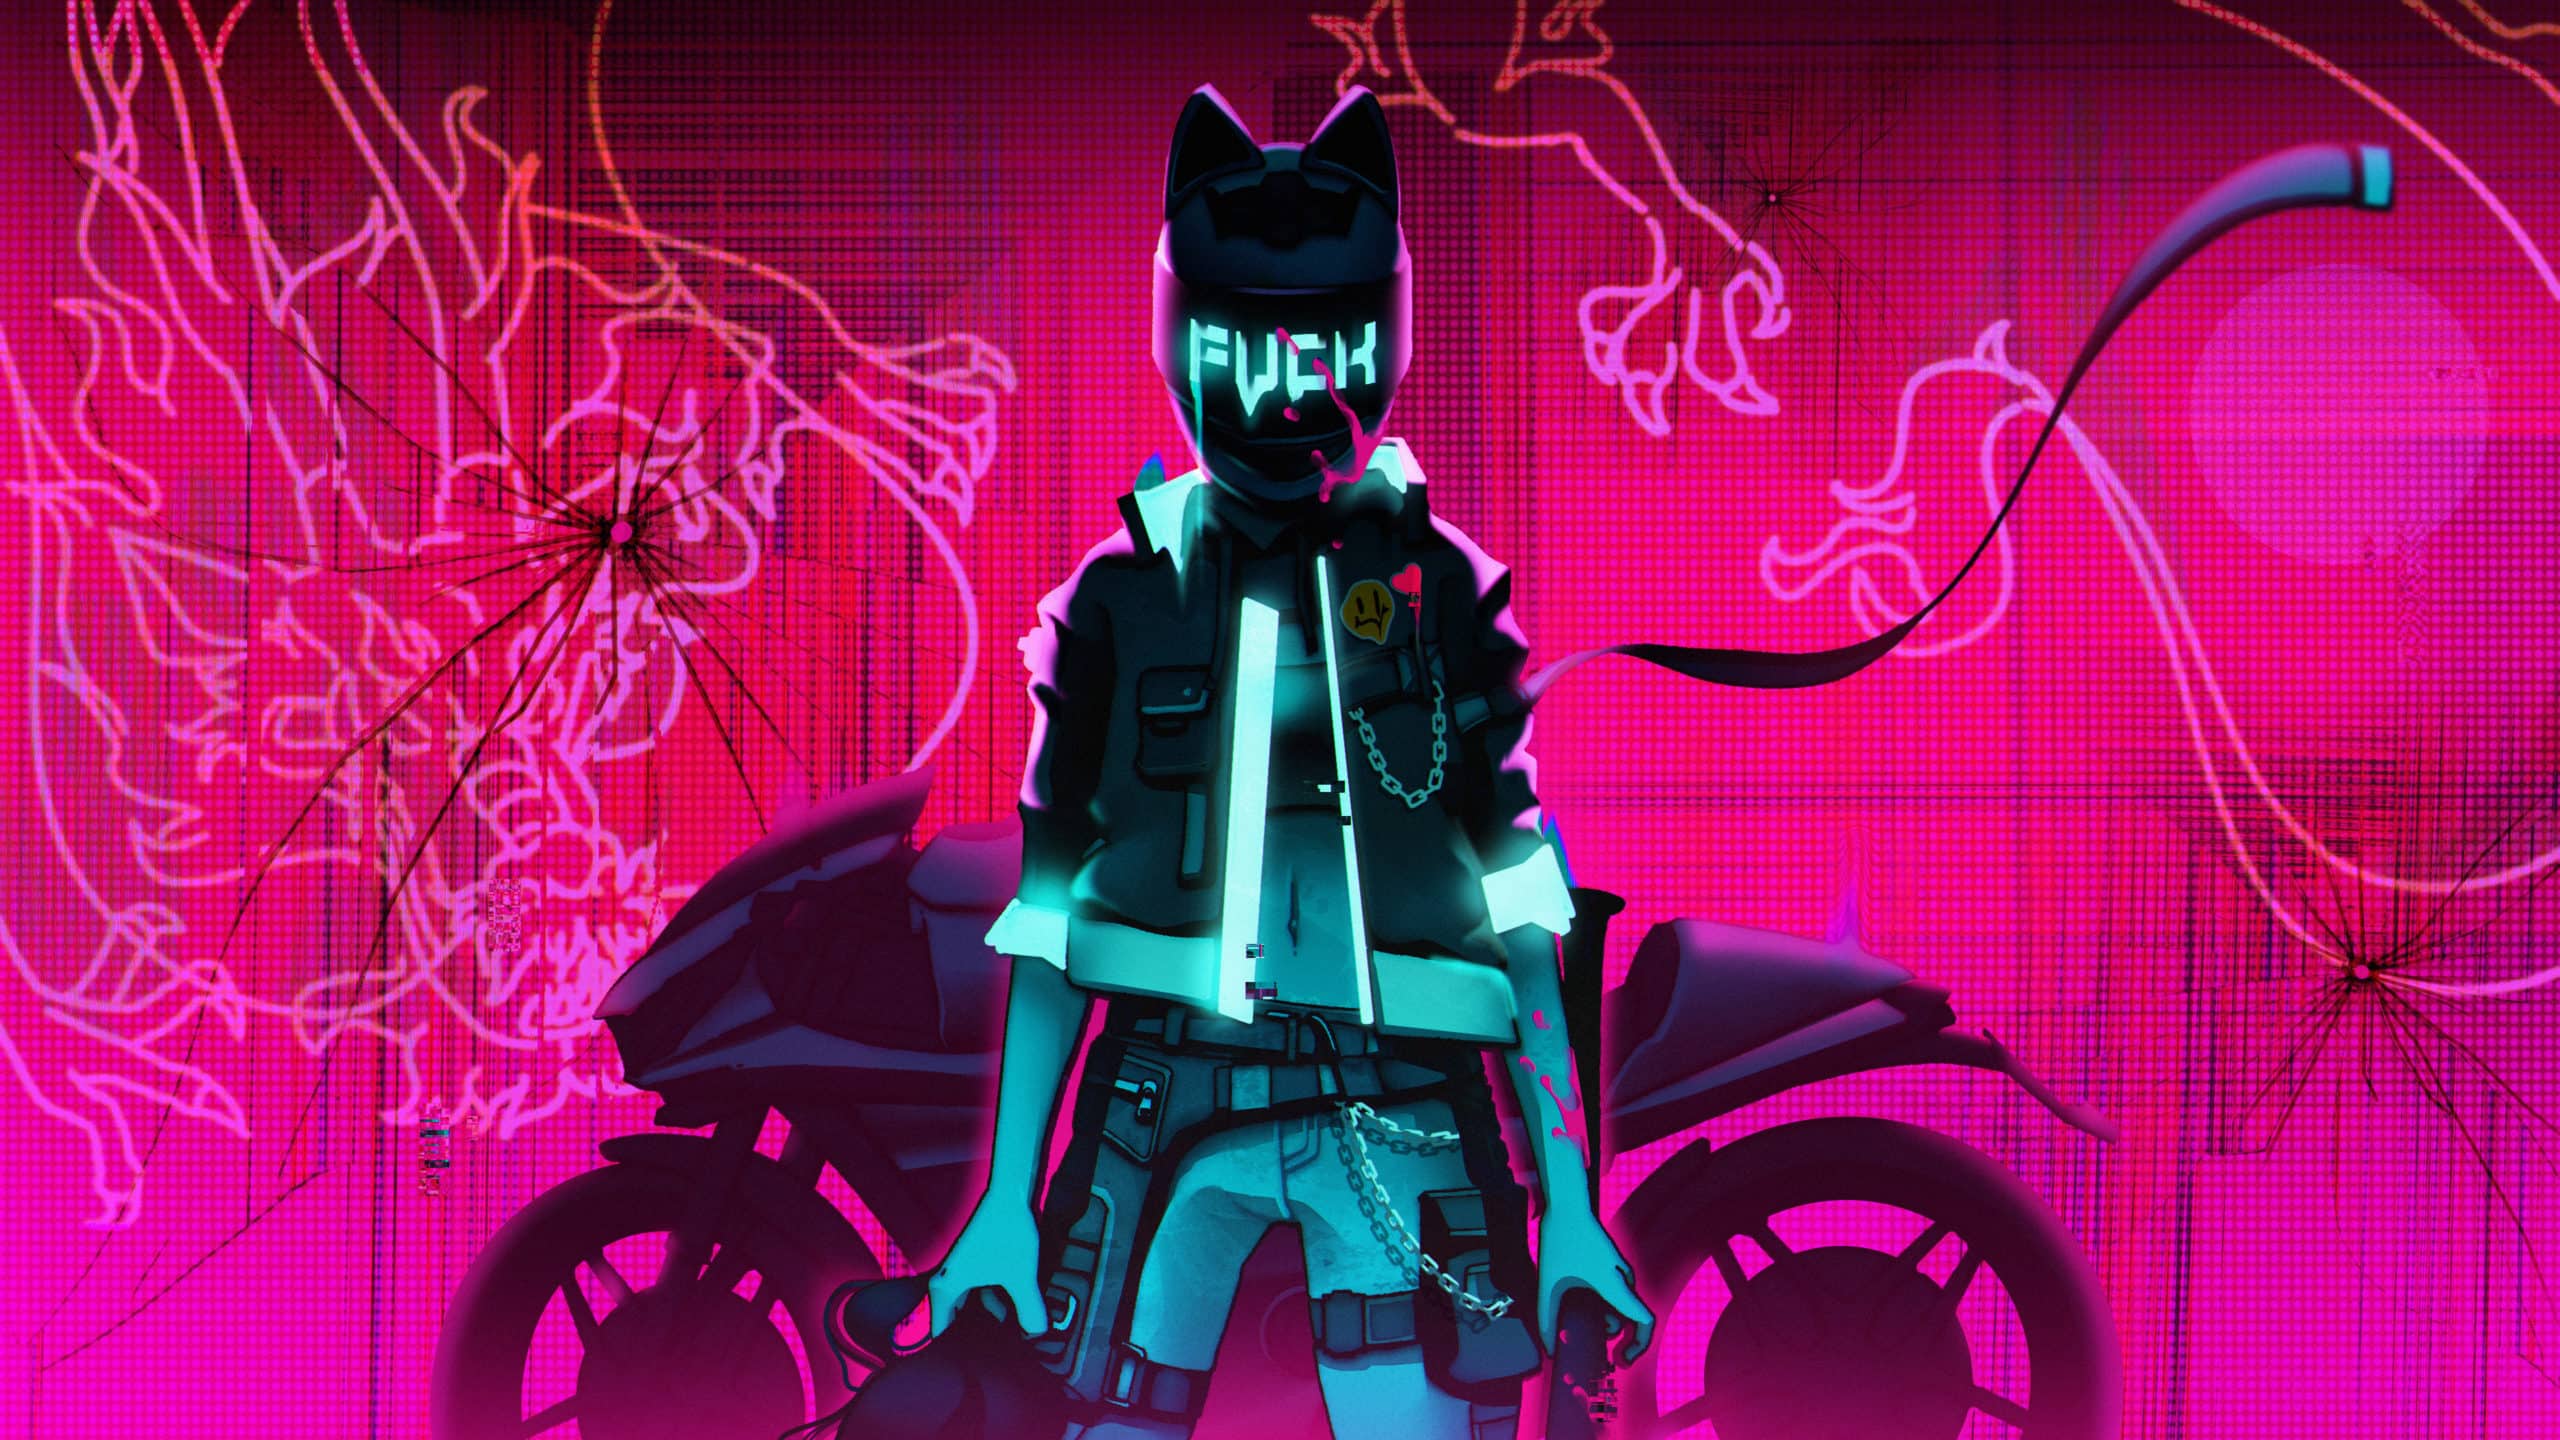 50 Best iPhone X Wallpapers  Backgrounds  Cyberpunk city Cyberpunk  aesthetic Neon noir